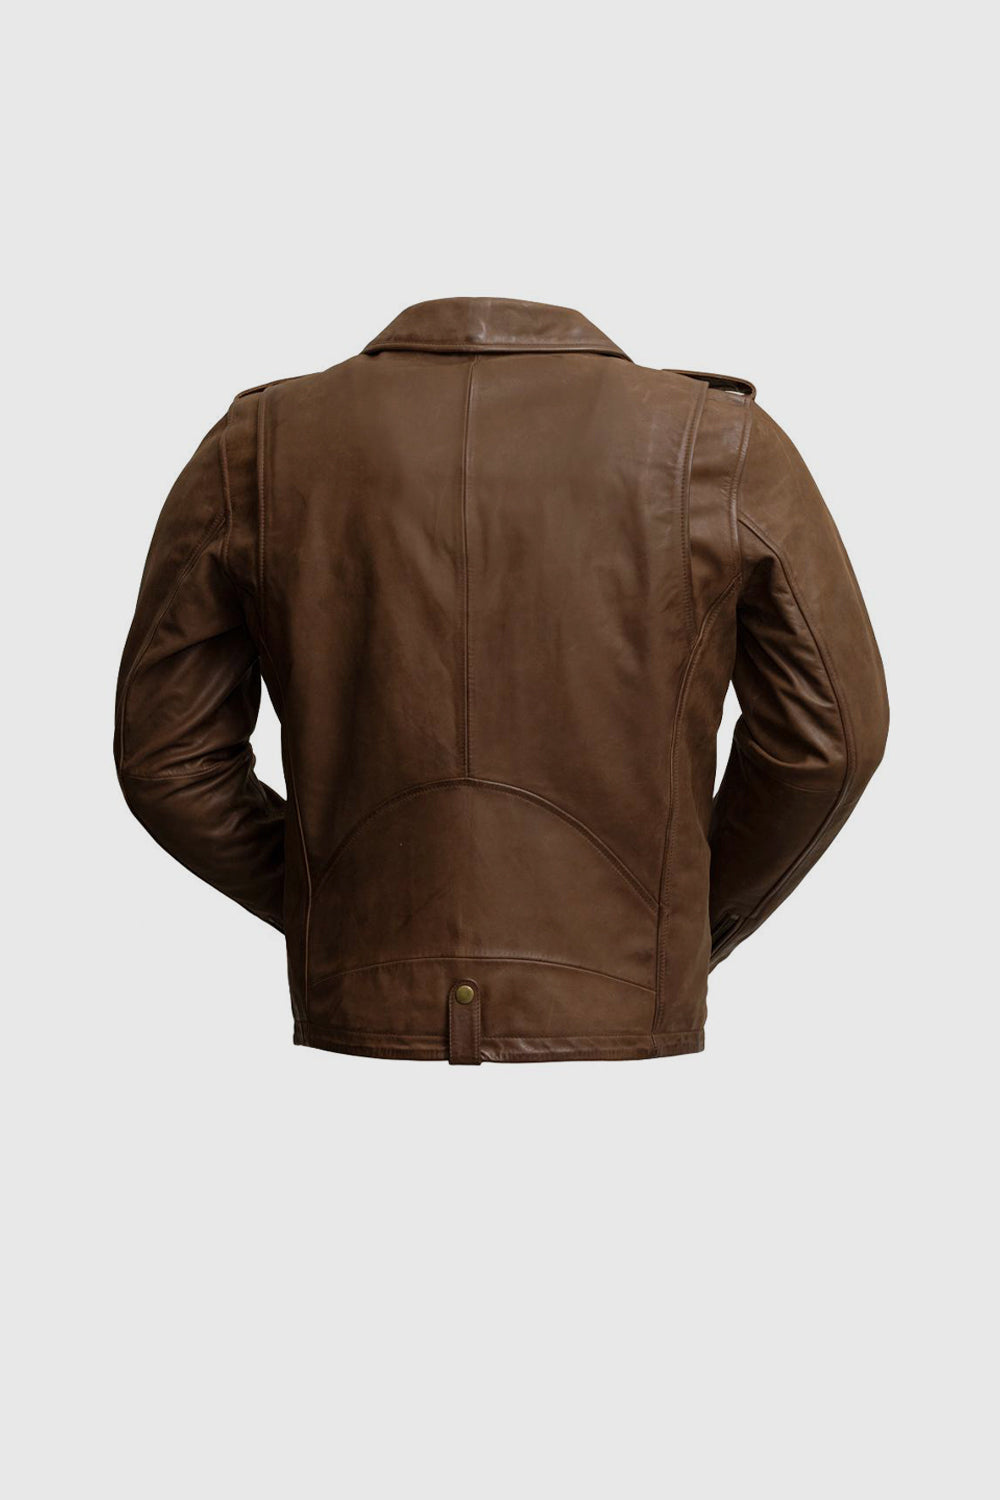 Sid Mens Leather Jacket Men's Motorcycle style Jacket Whet Blu NYC   